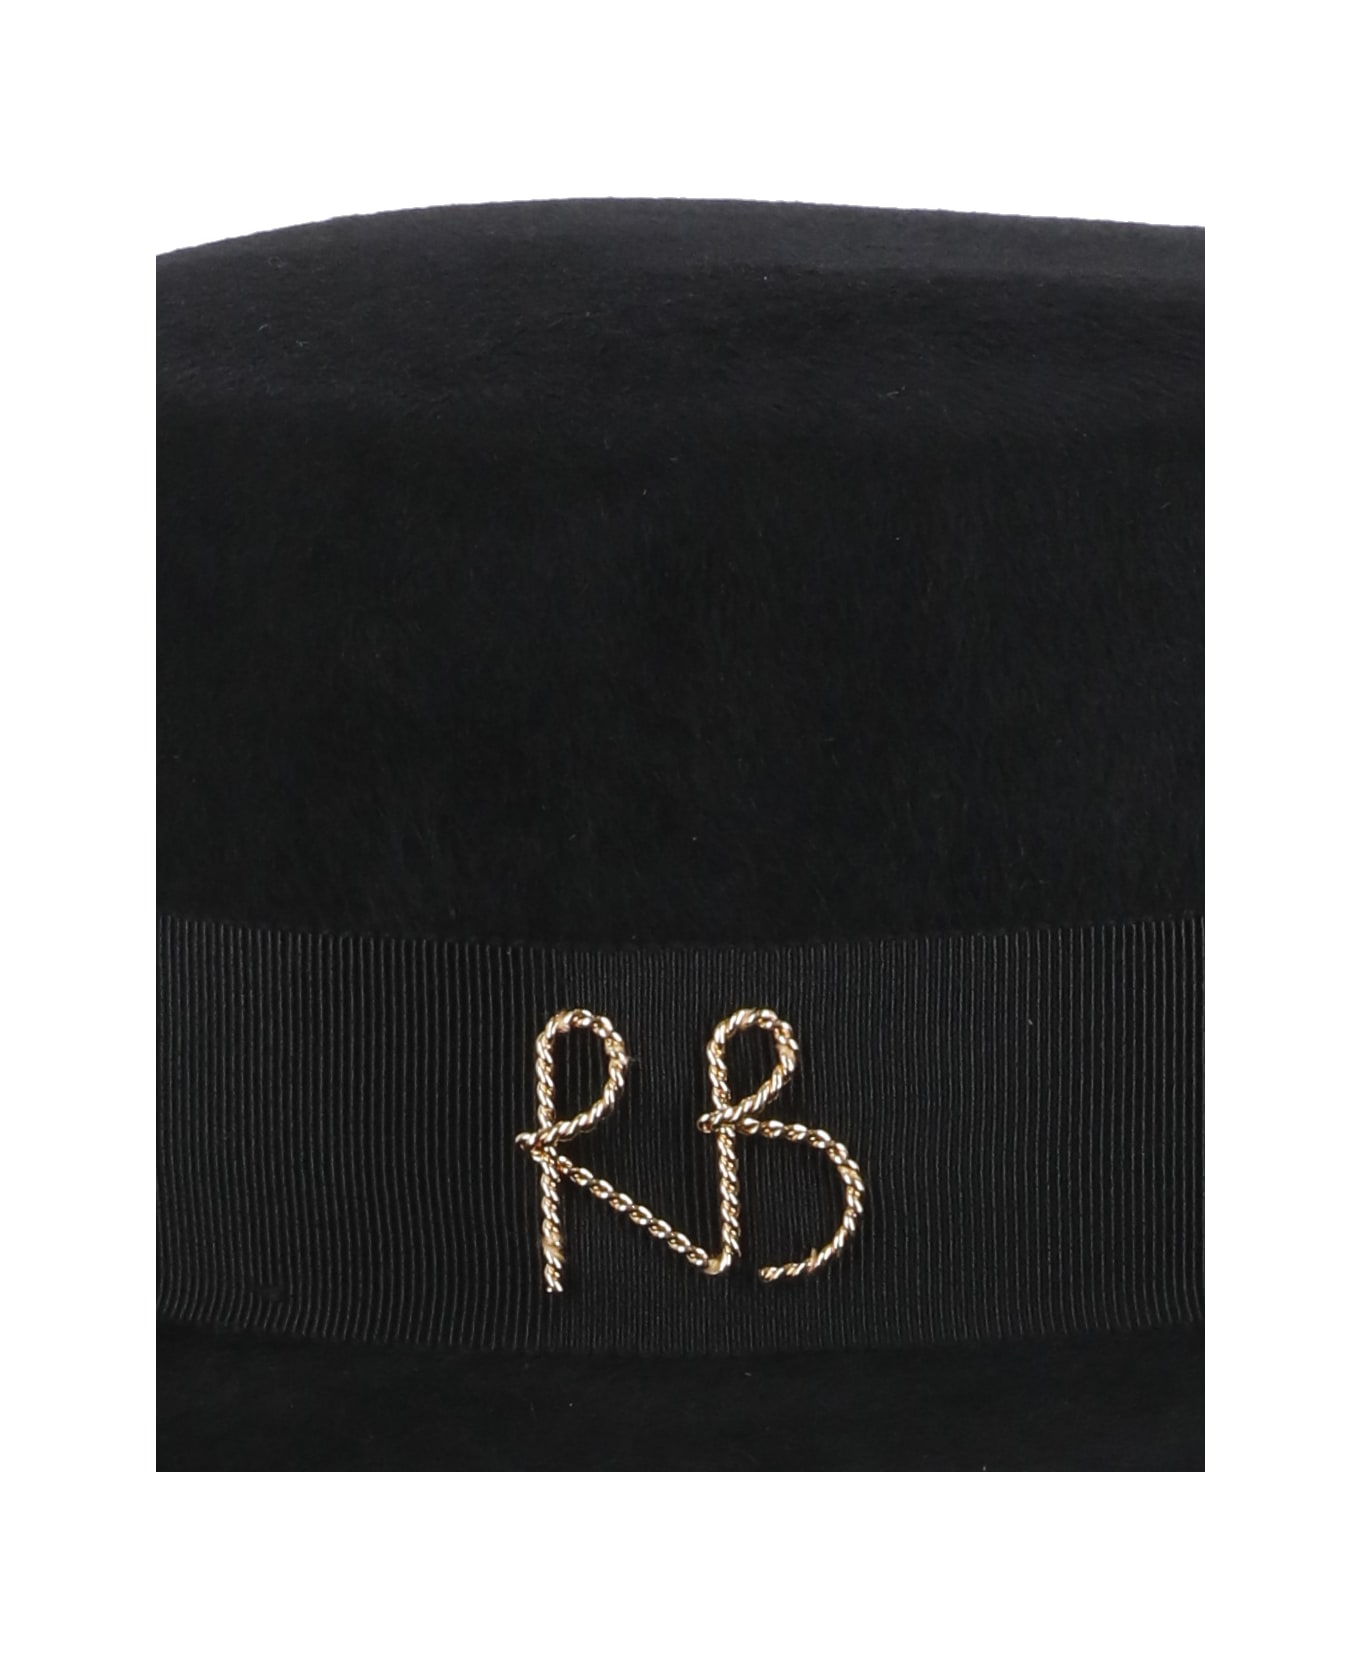 Ruslan Baginskiy Logoed Hat - Black 帽子